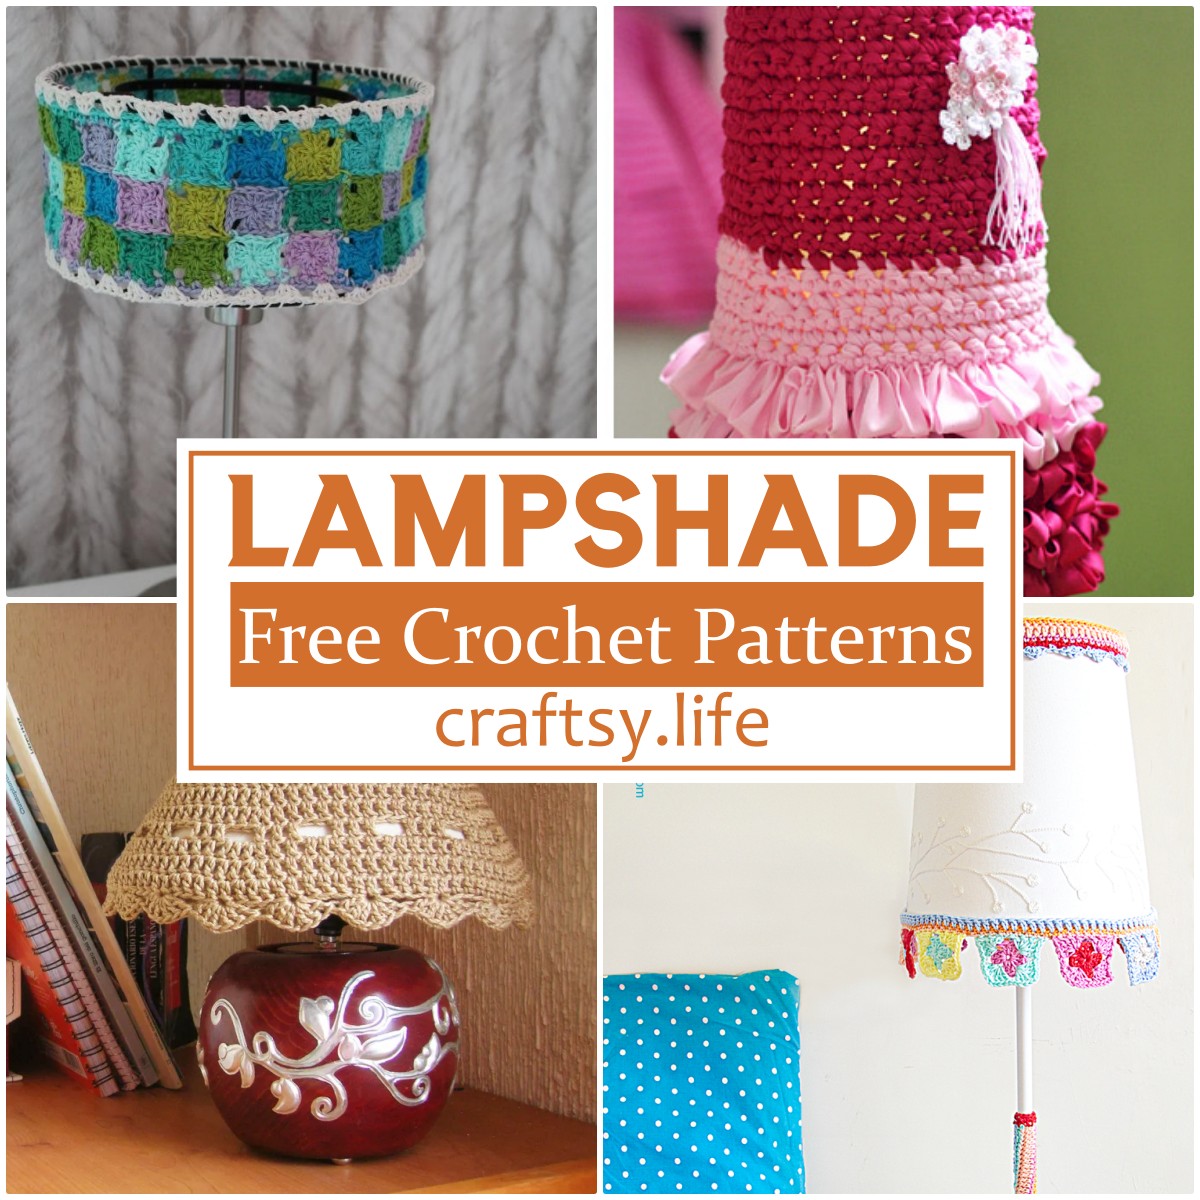 Free Crochet Lampshade Patterns